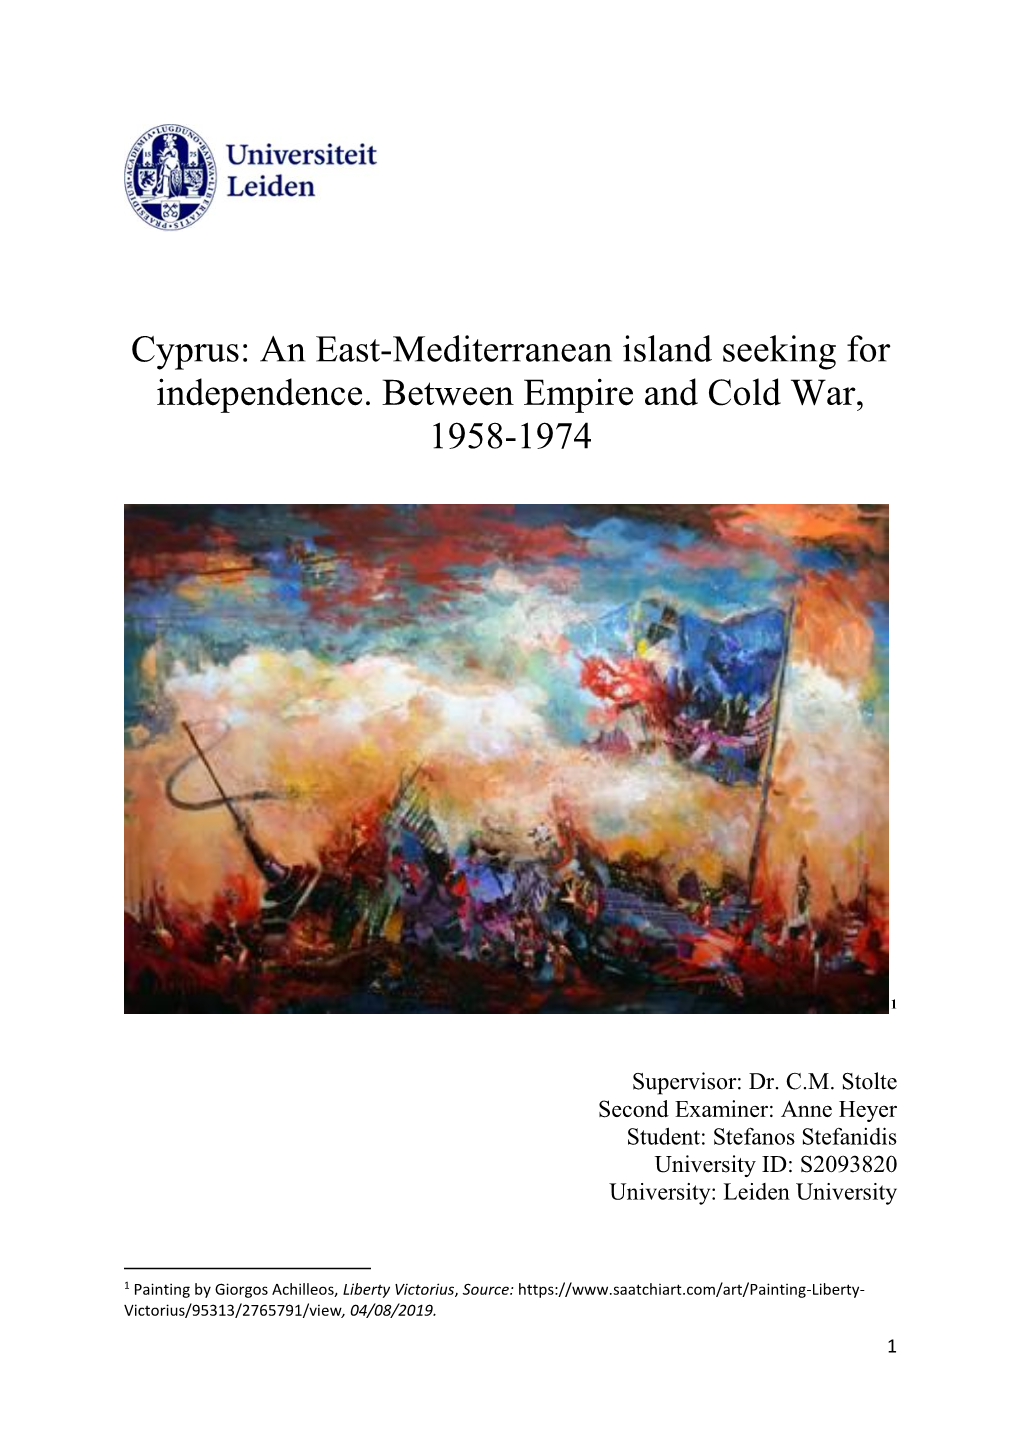 Cyprus: an East-Mediterranean Island Seeking for Independence